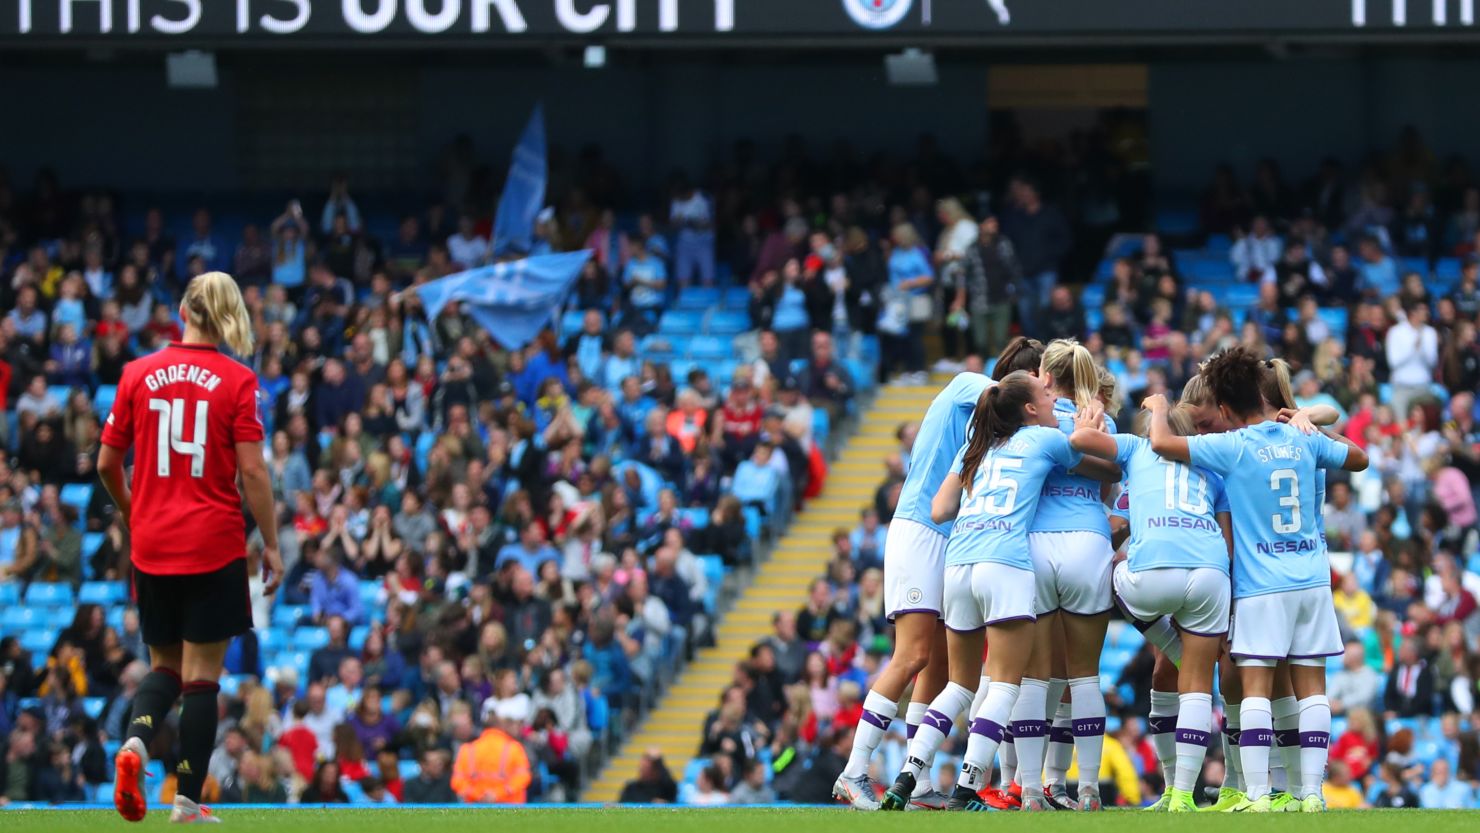 Manchester City players celebrate Caroline Weir's winning goal.